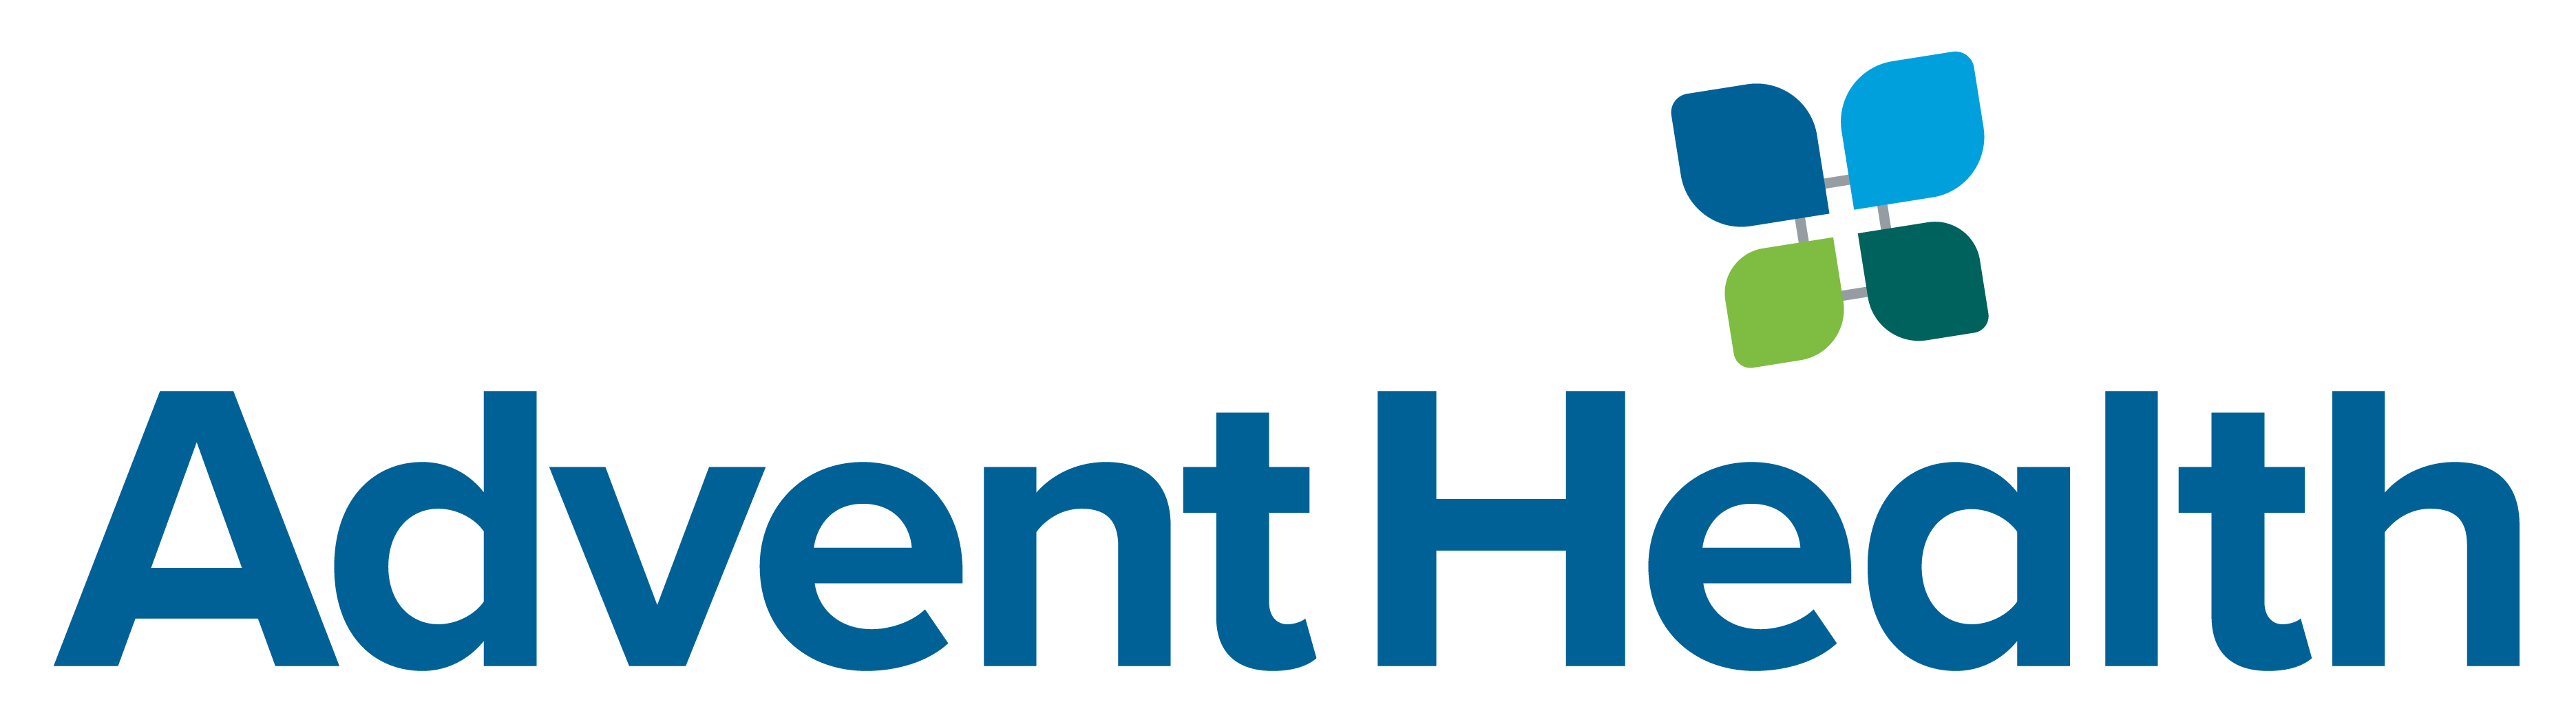 Advent Health Logo